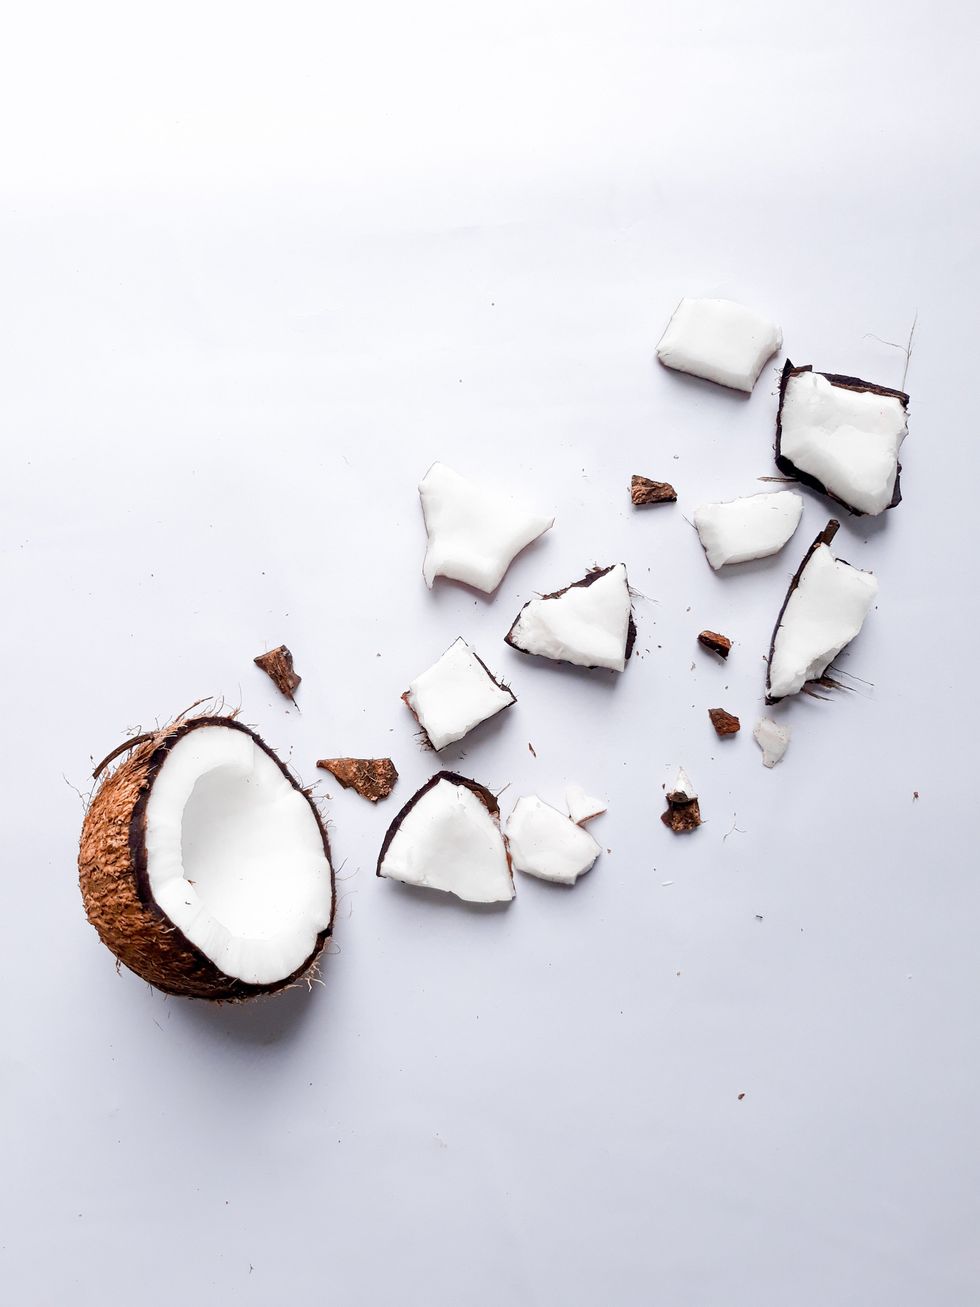 Coconut cut up into pieces.